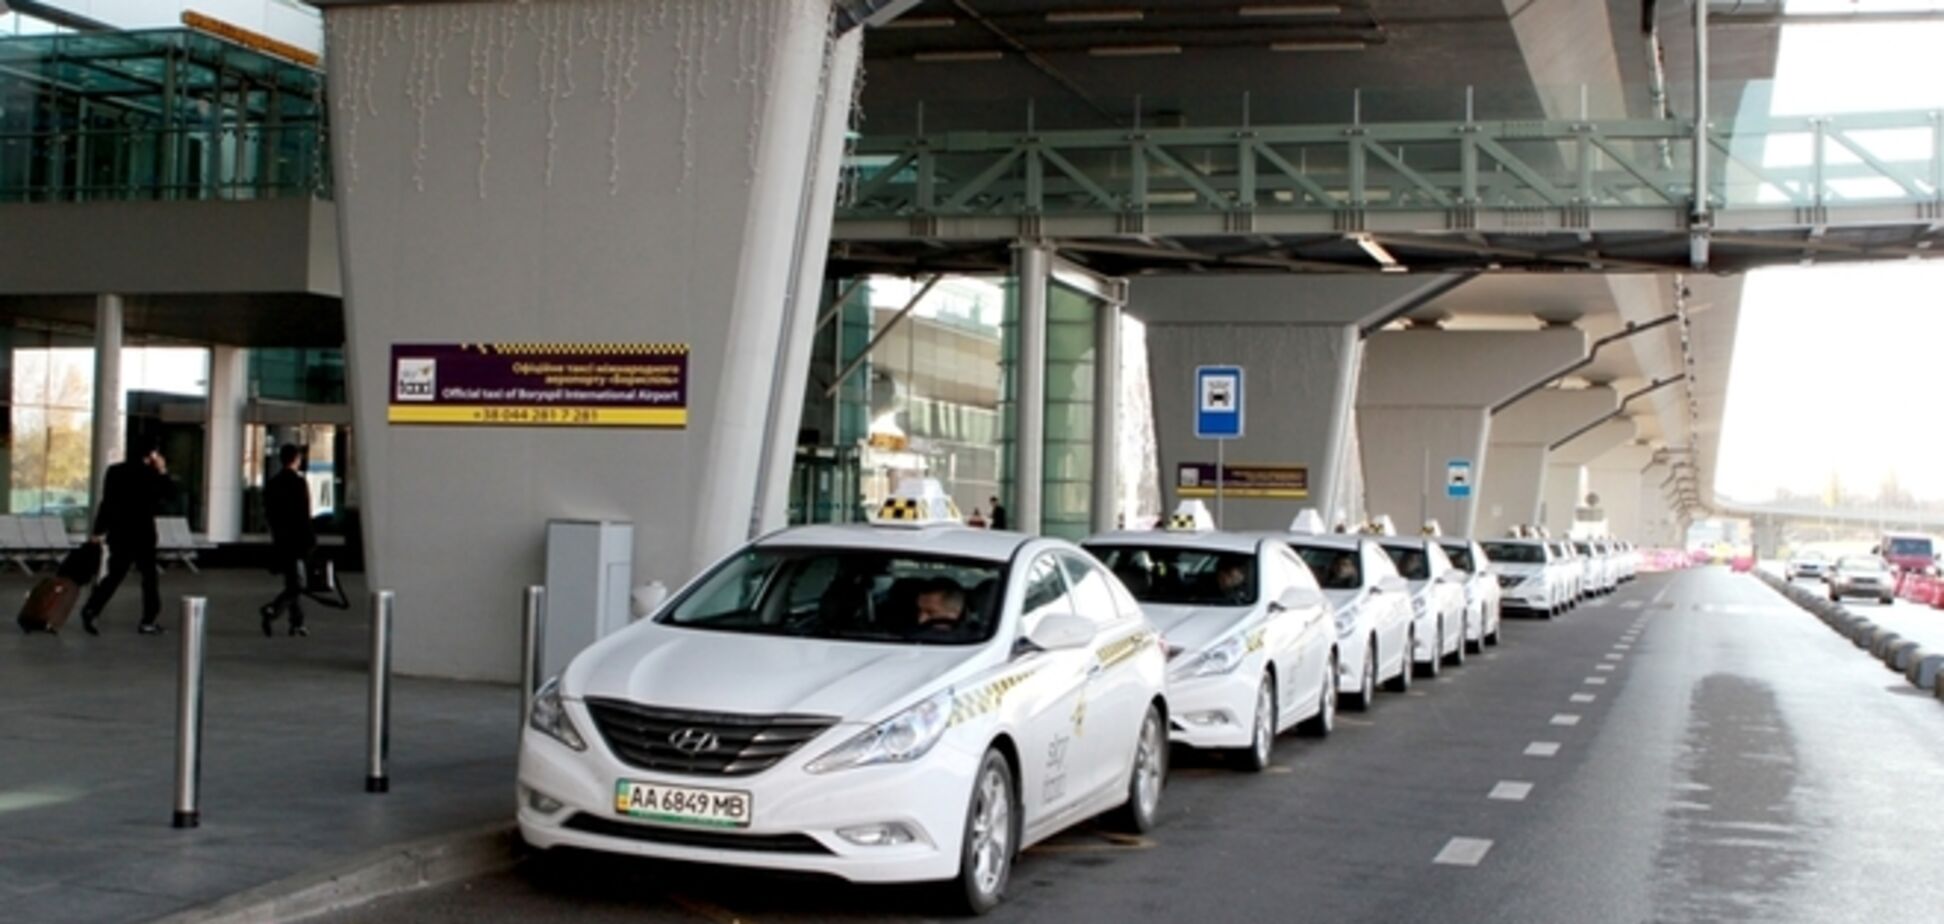 В аэропорту 'Борисполь' обещают провести тендер для служб такси по-честному